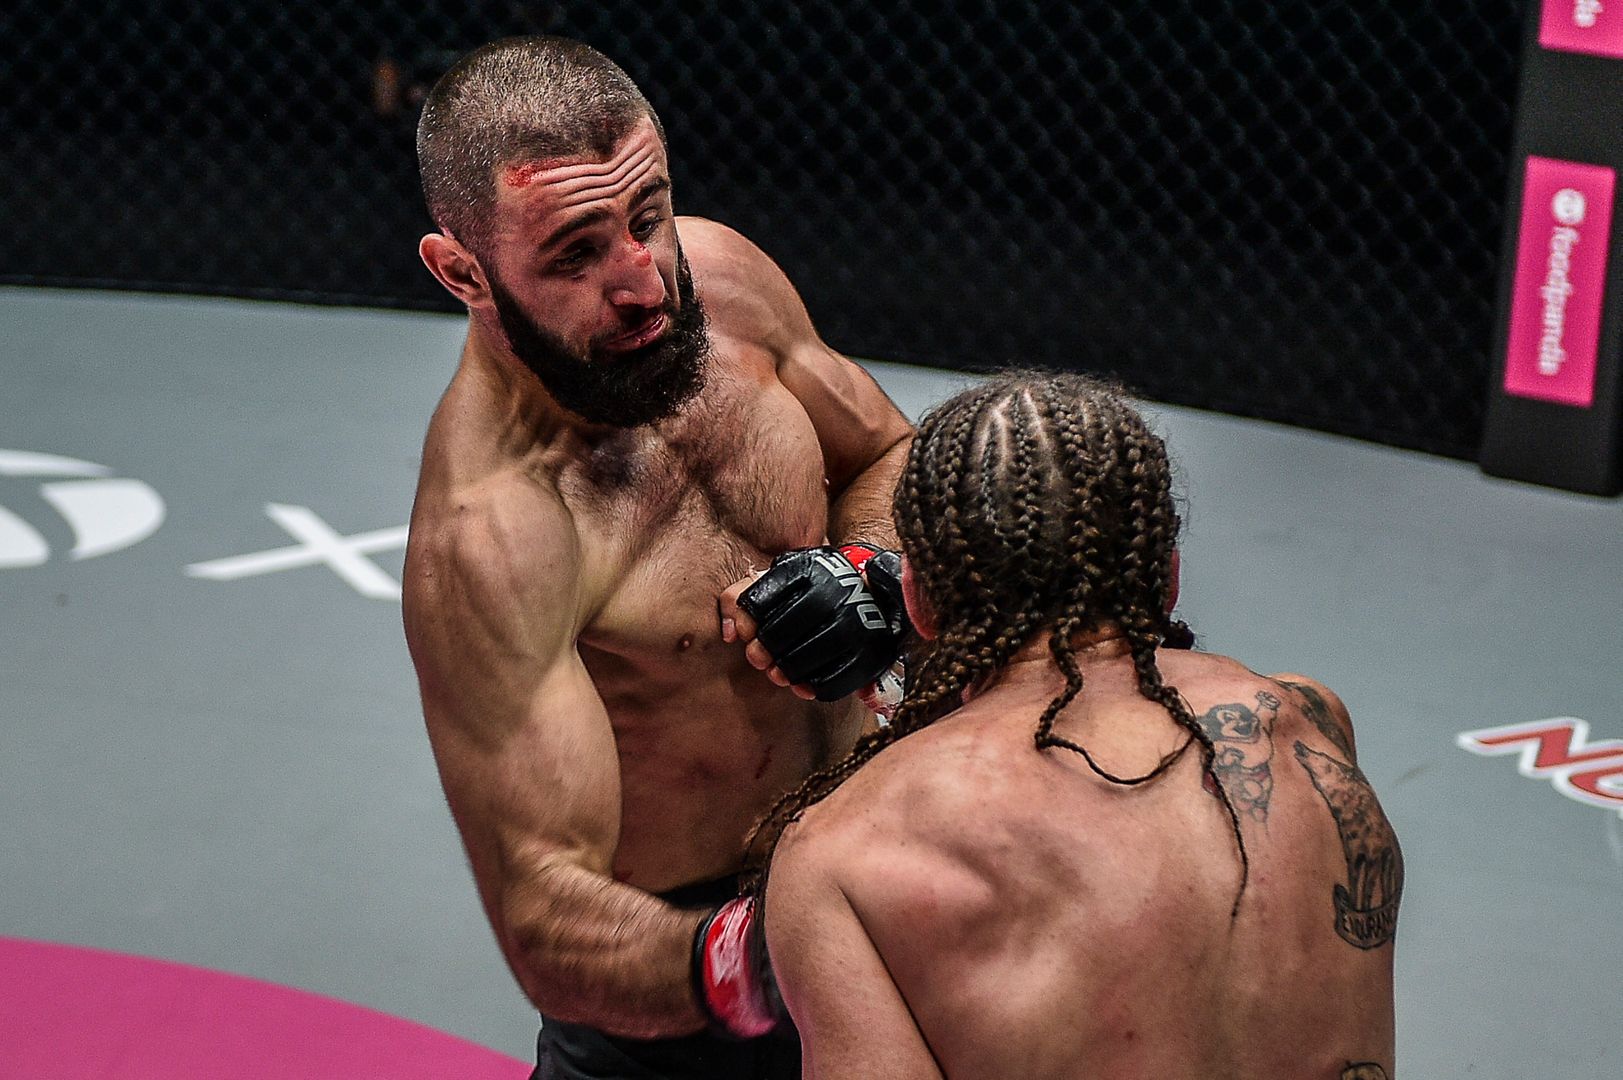 Kyrgyzstan MMA star Kiamrian Abbasov fights American athlete James Nakashima at ONE: INSIDE THE MATRIX II in Singapore